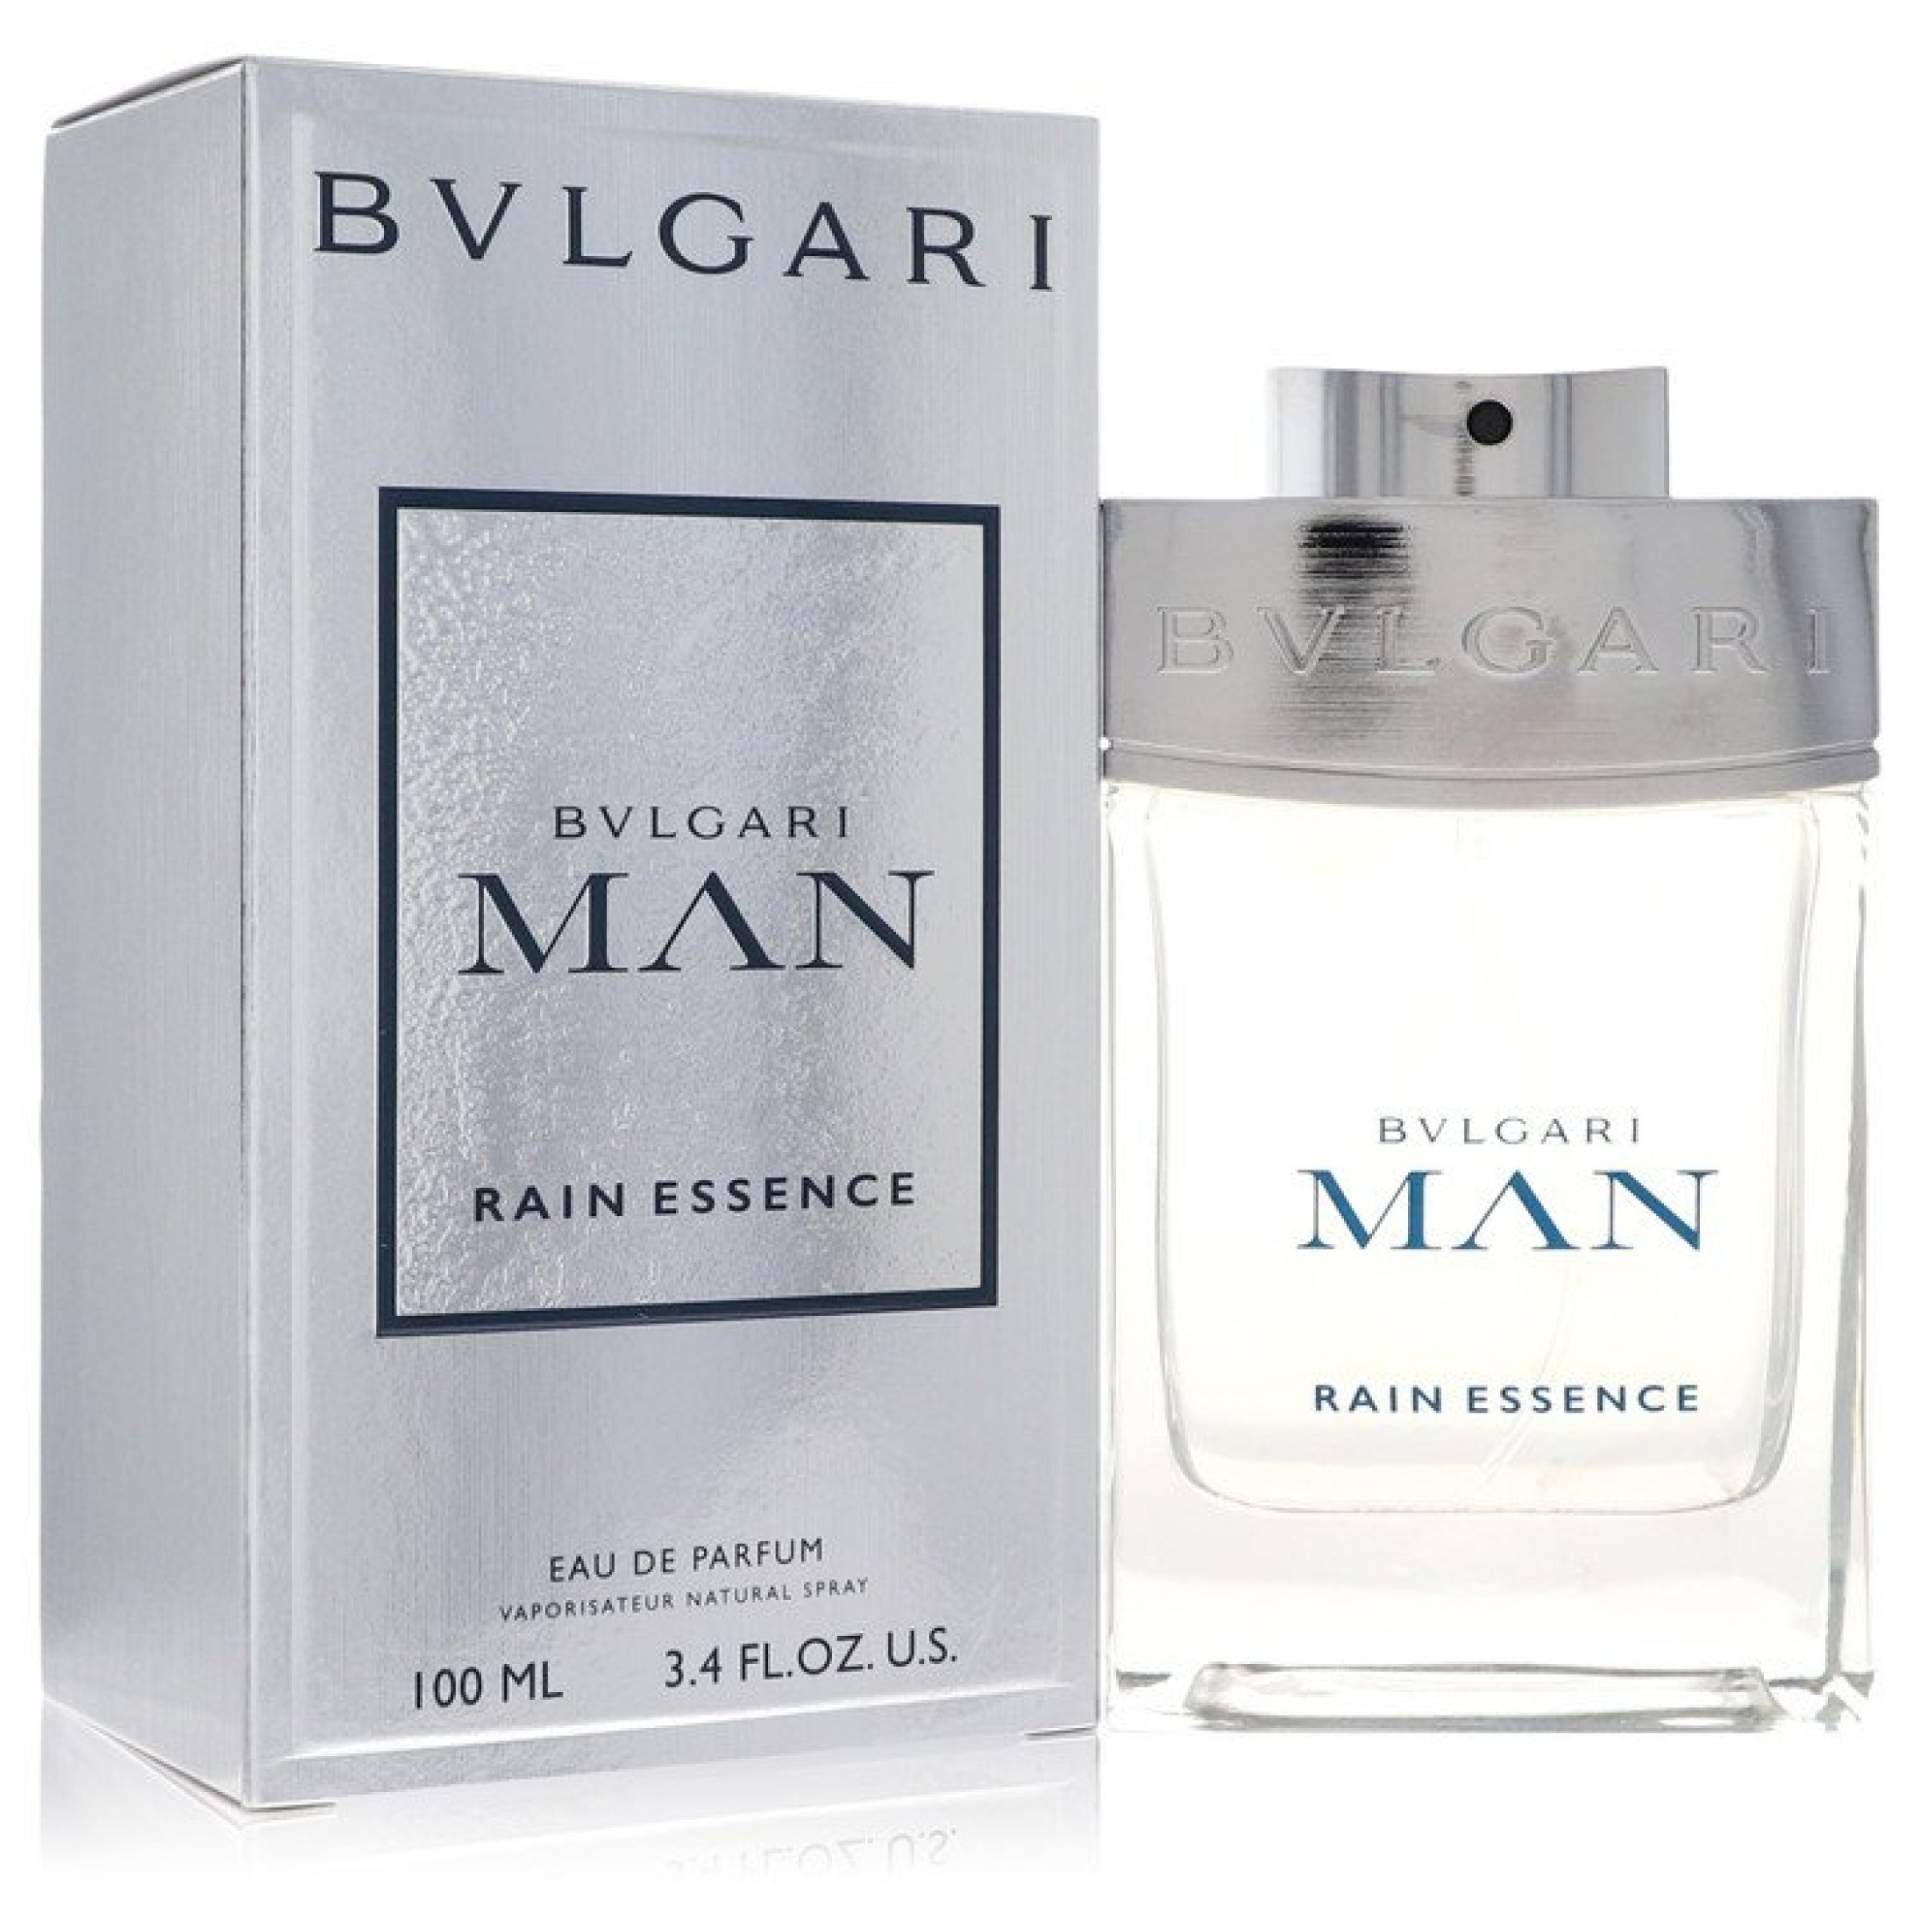 Bvlgari Man Rain Essence Eau De Parfum Spray 101 ml von Bvlgari